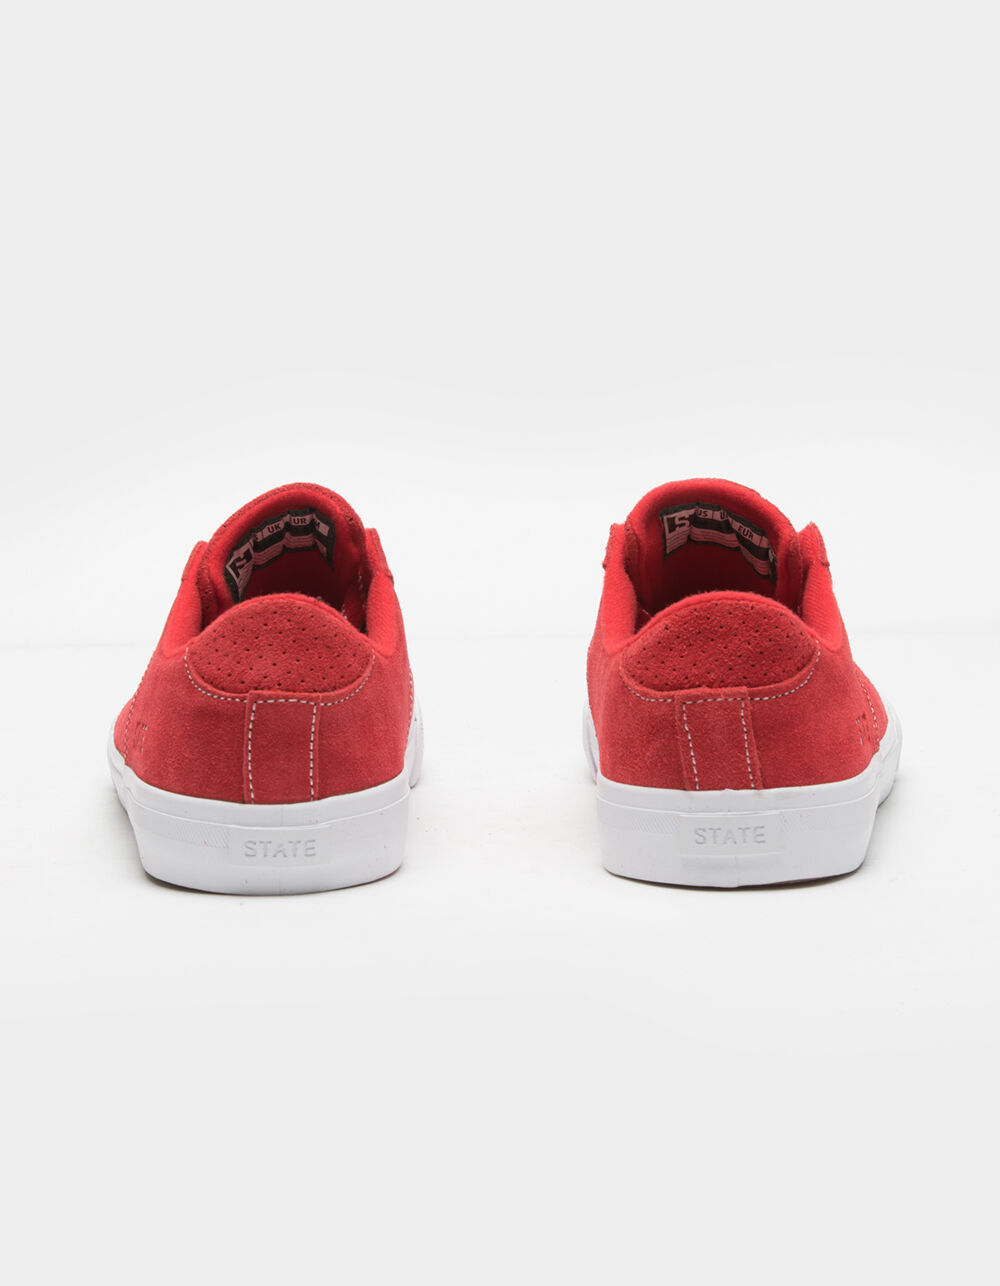 STATE FOOTWEAR Leland Mens Suede Shoes - RED | Tillys